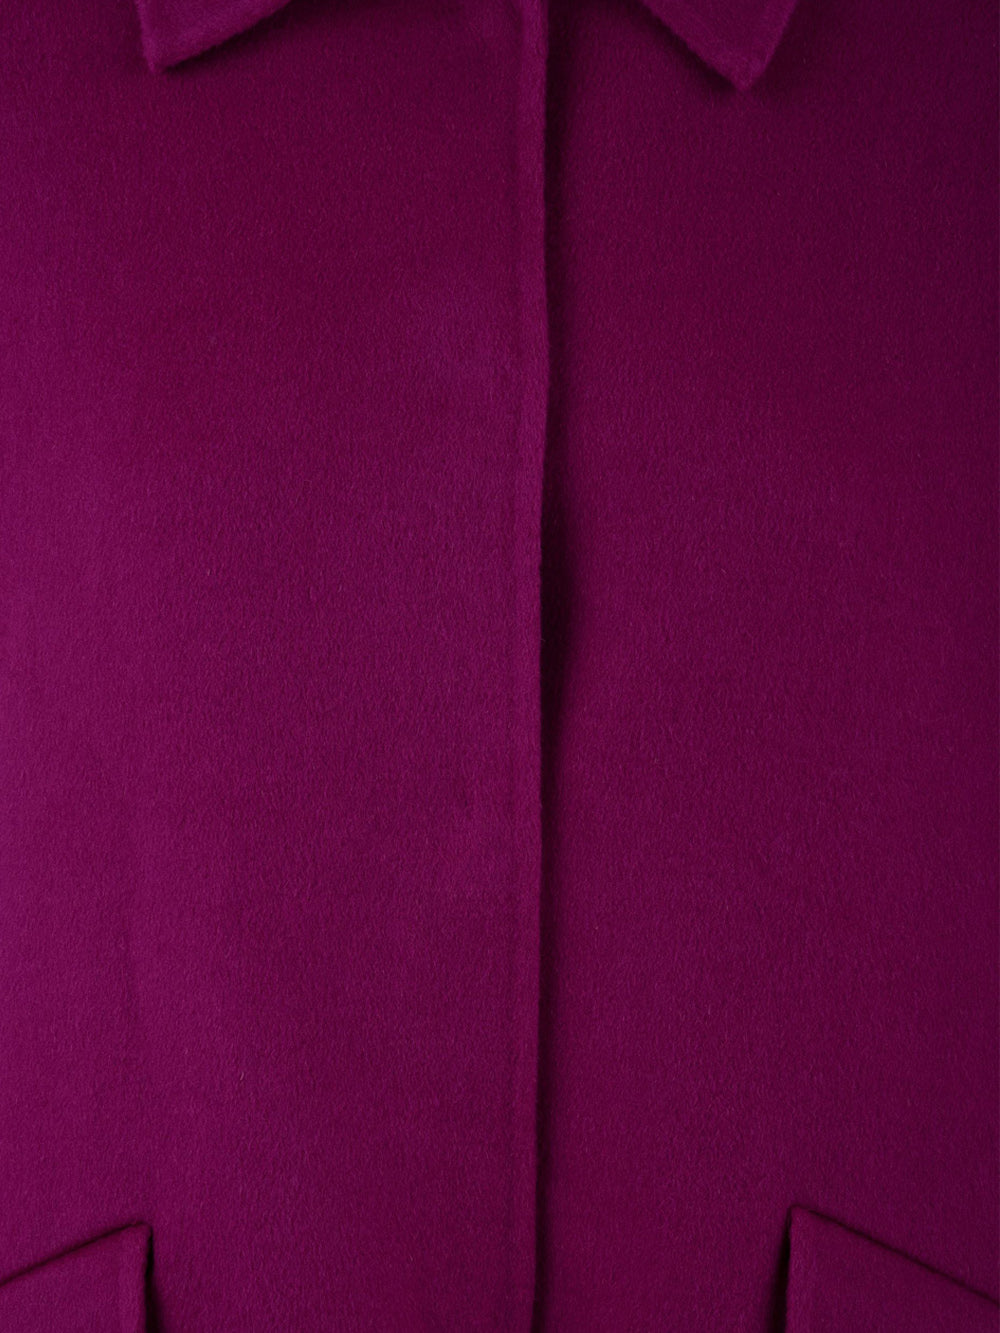 Cappotto lungo Donna in lana viola, Glox, lana